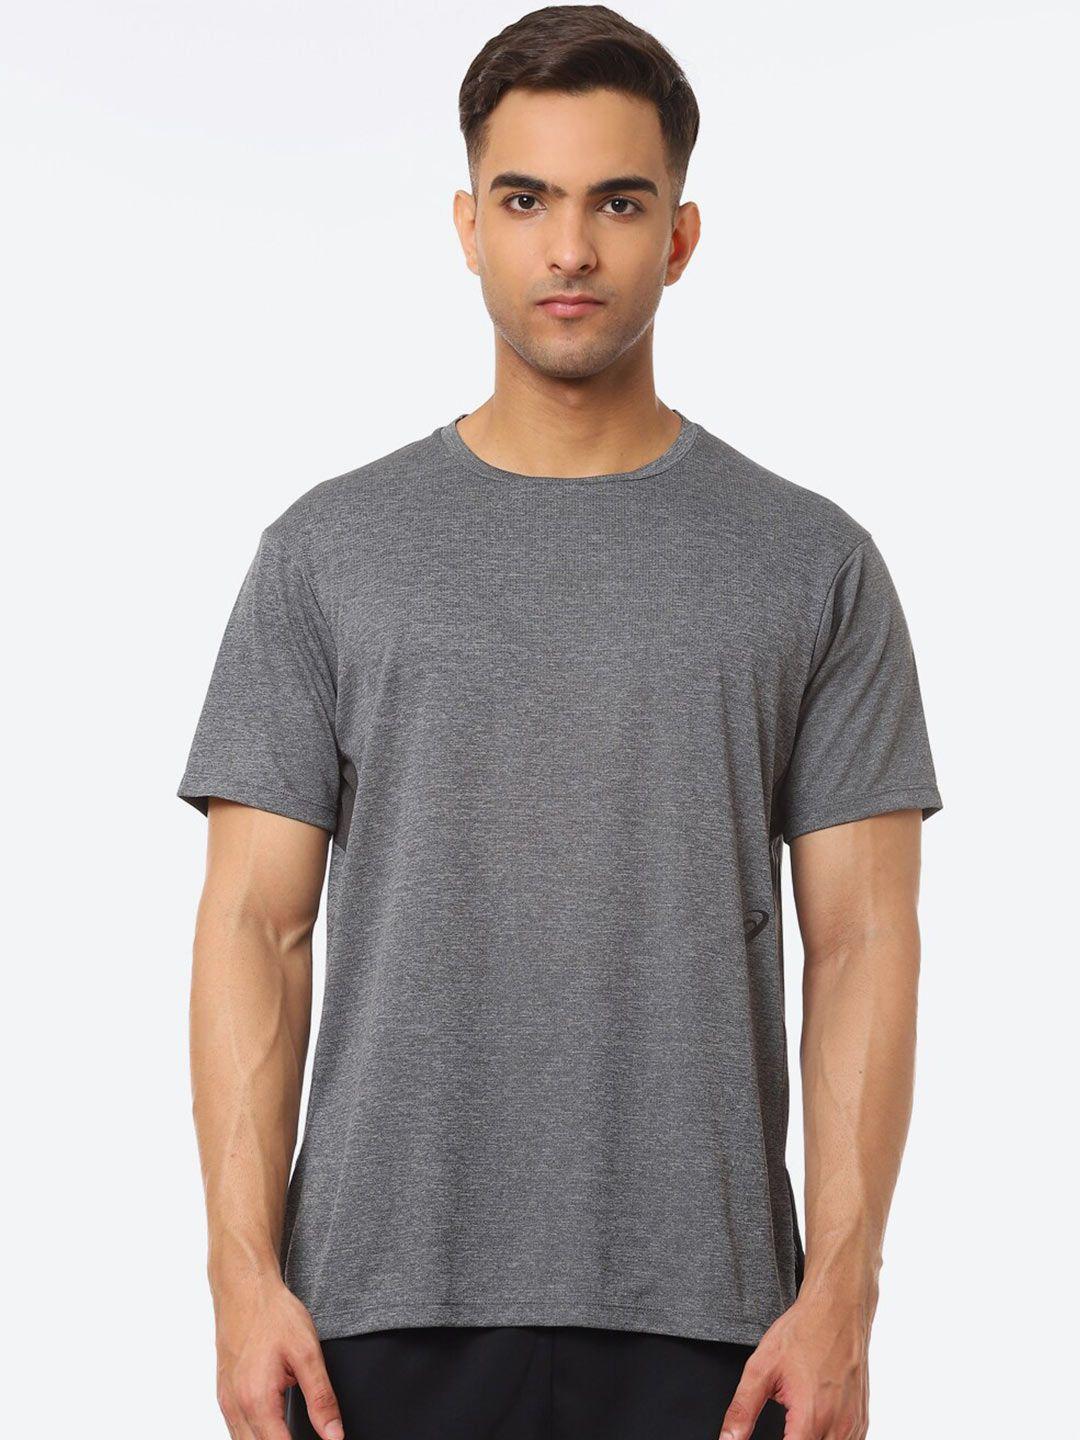 asics men grey solid t-shirt